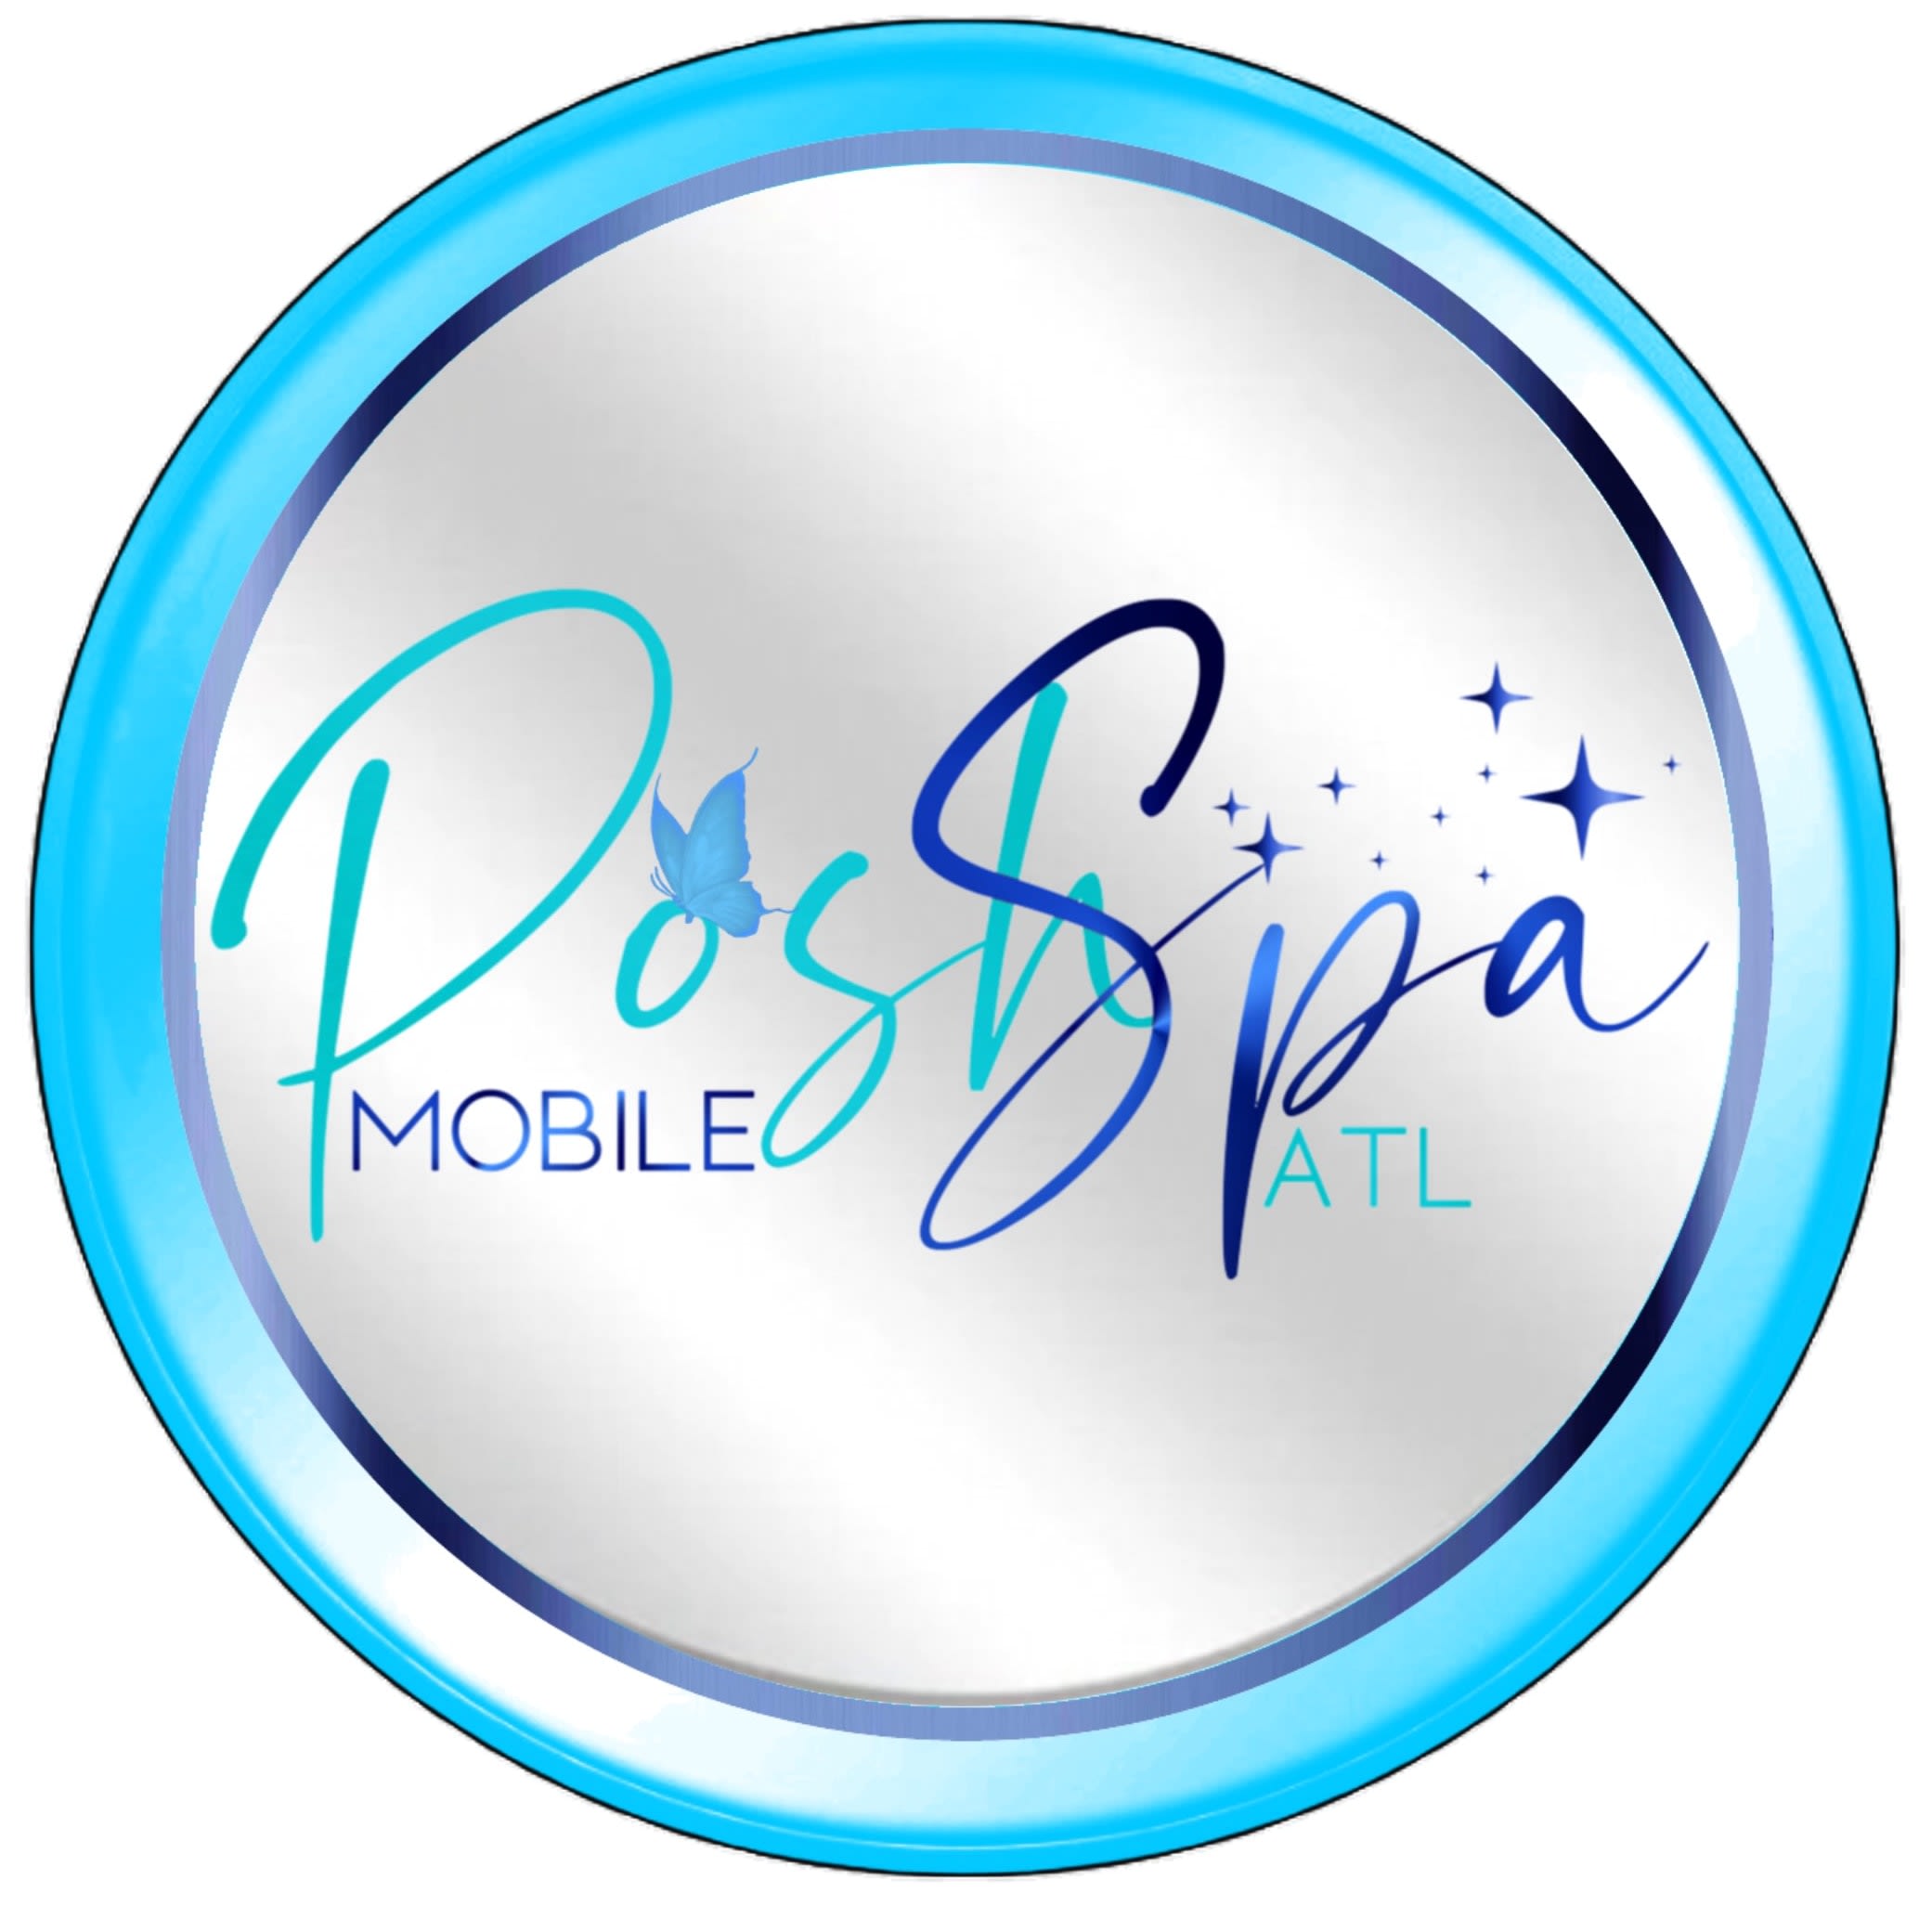 Posh Mobile Spa Atl